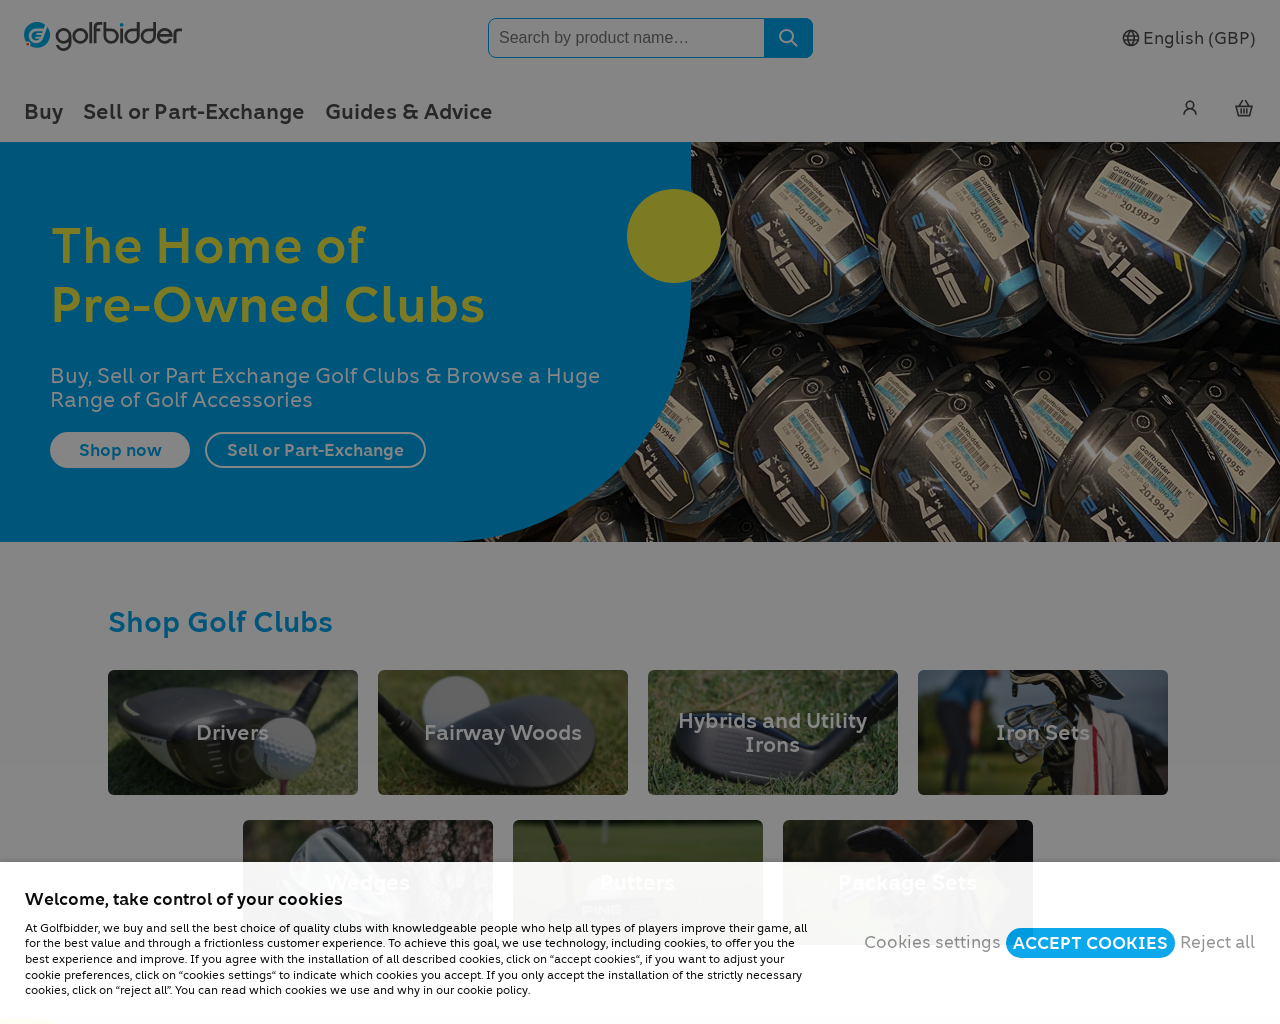 www.golfbidder.com